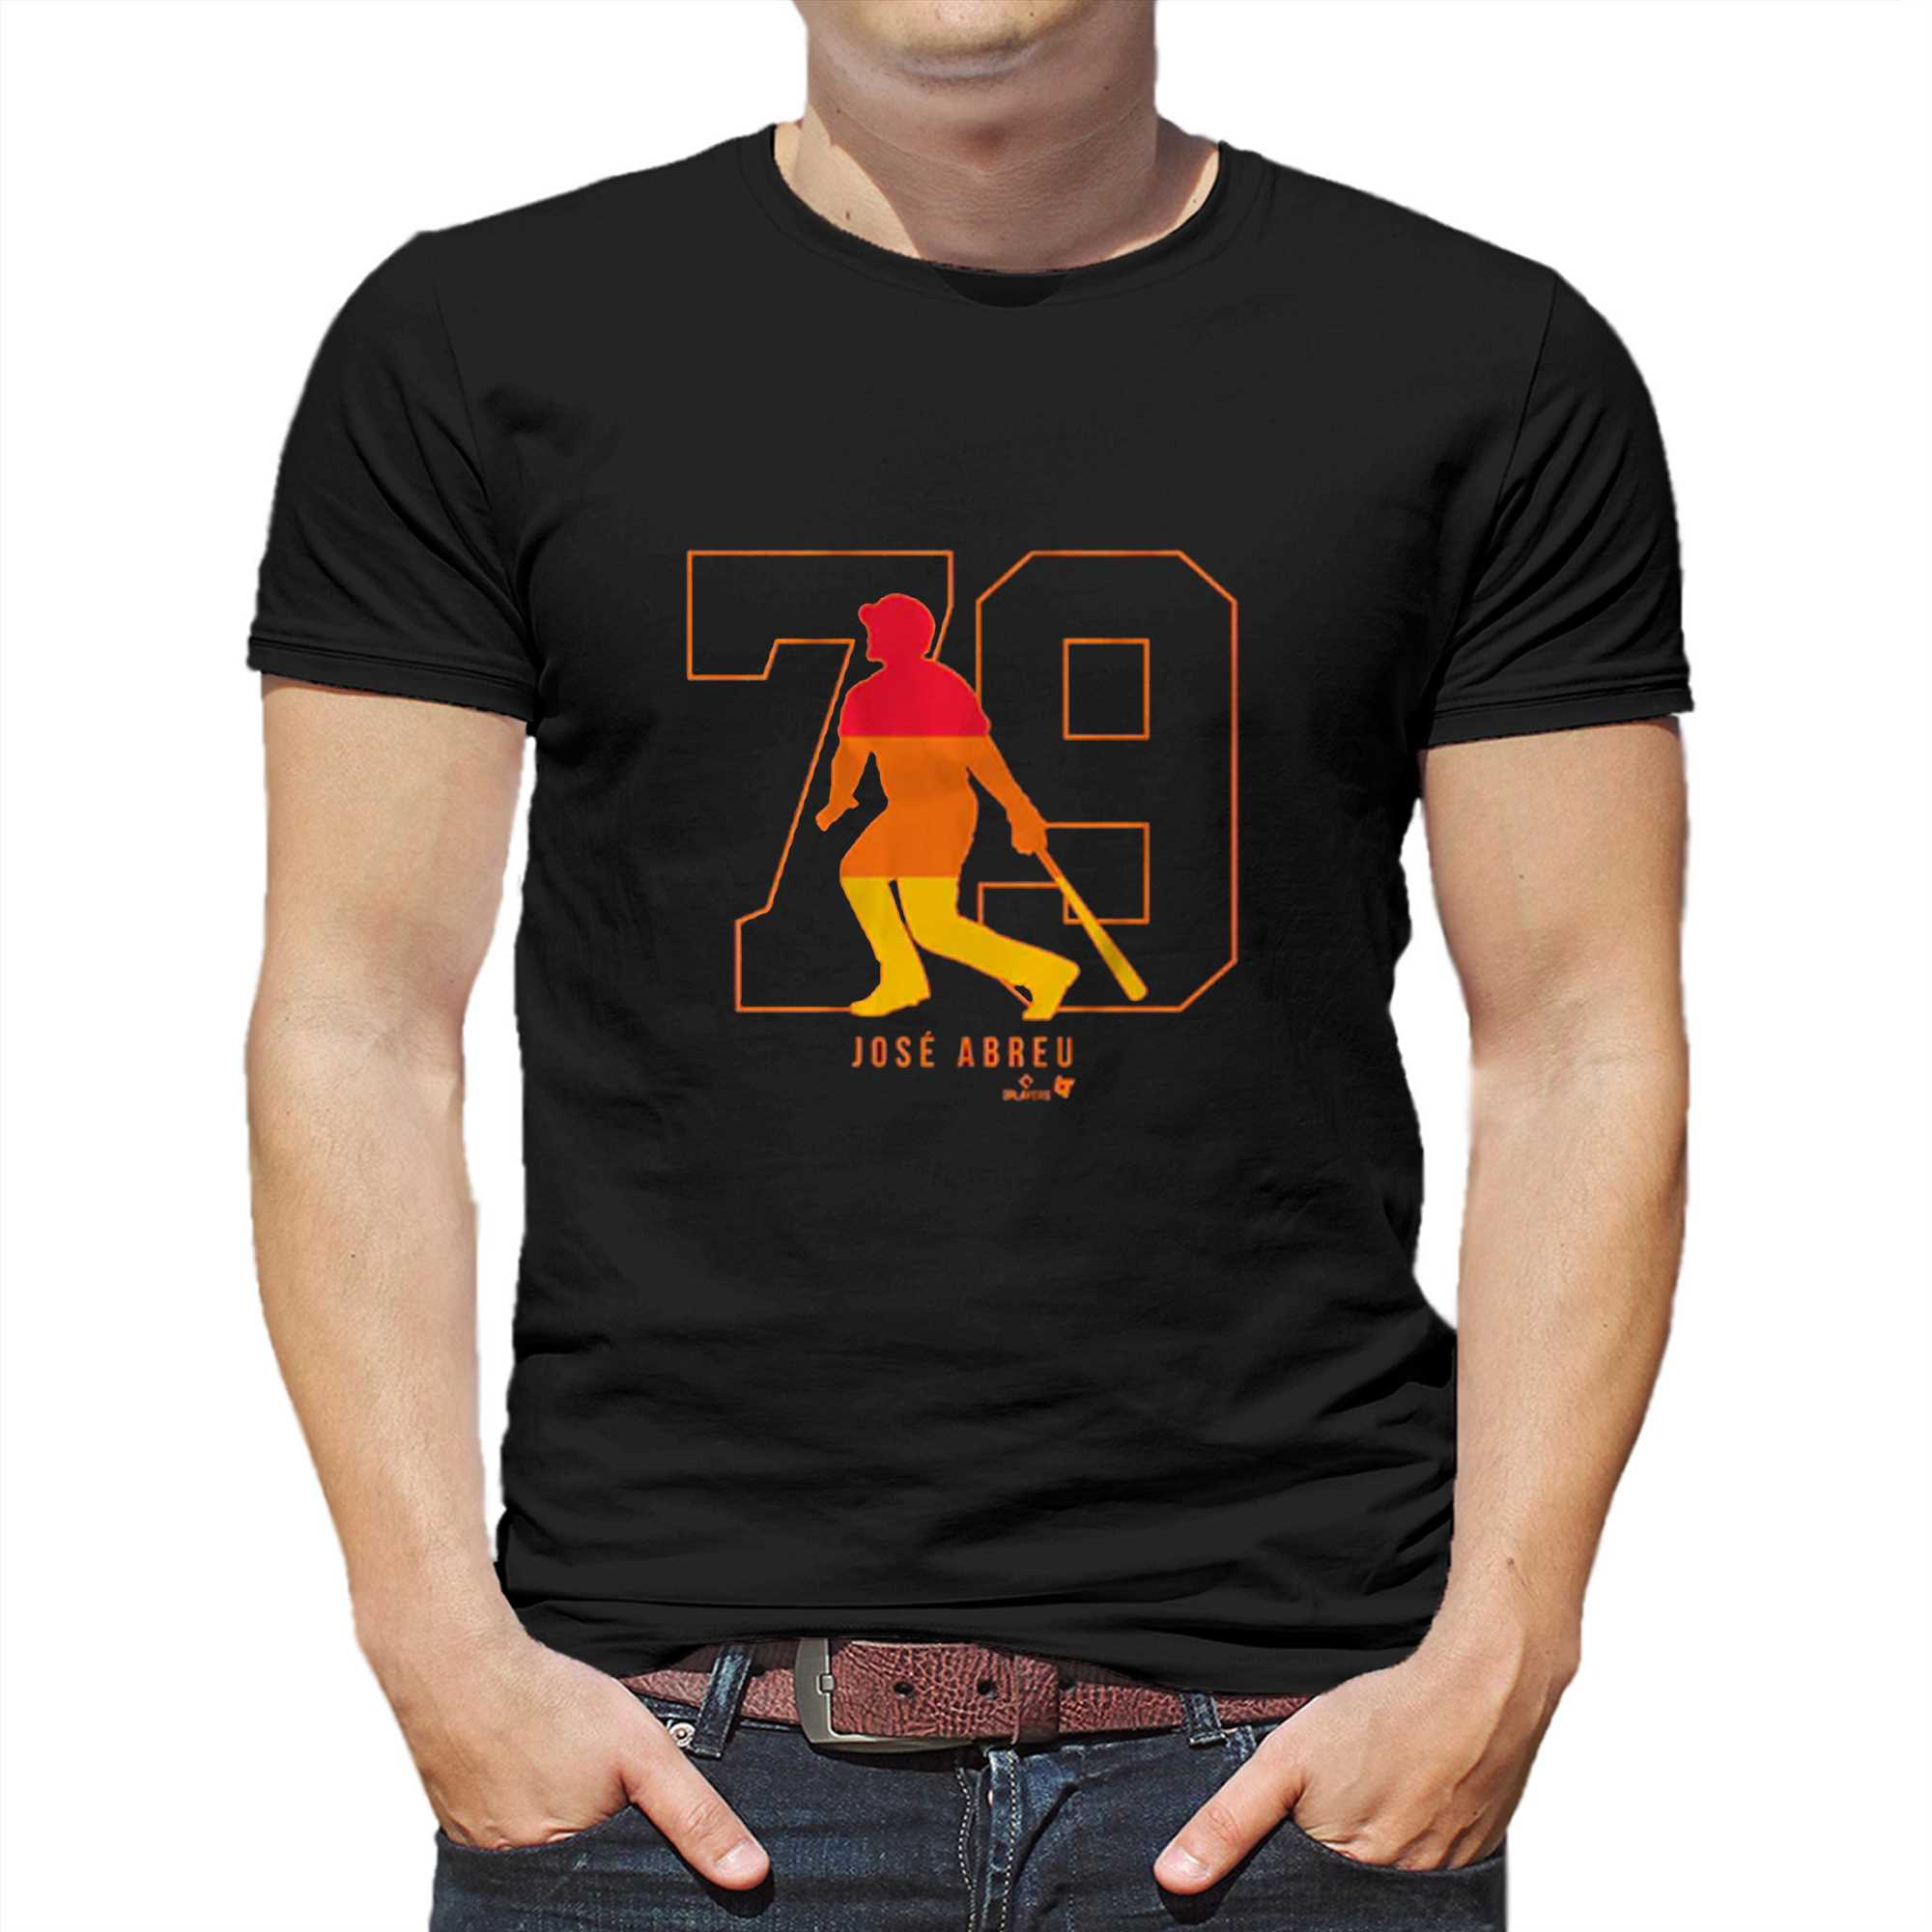 Jose Abreu 79 Houston T-shirt